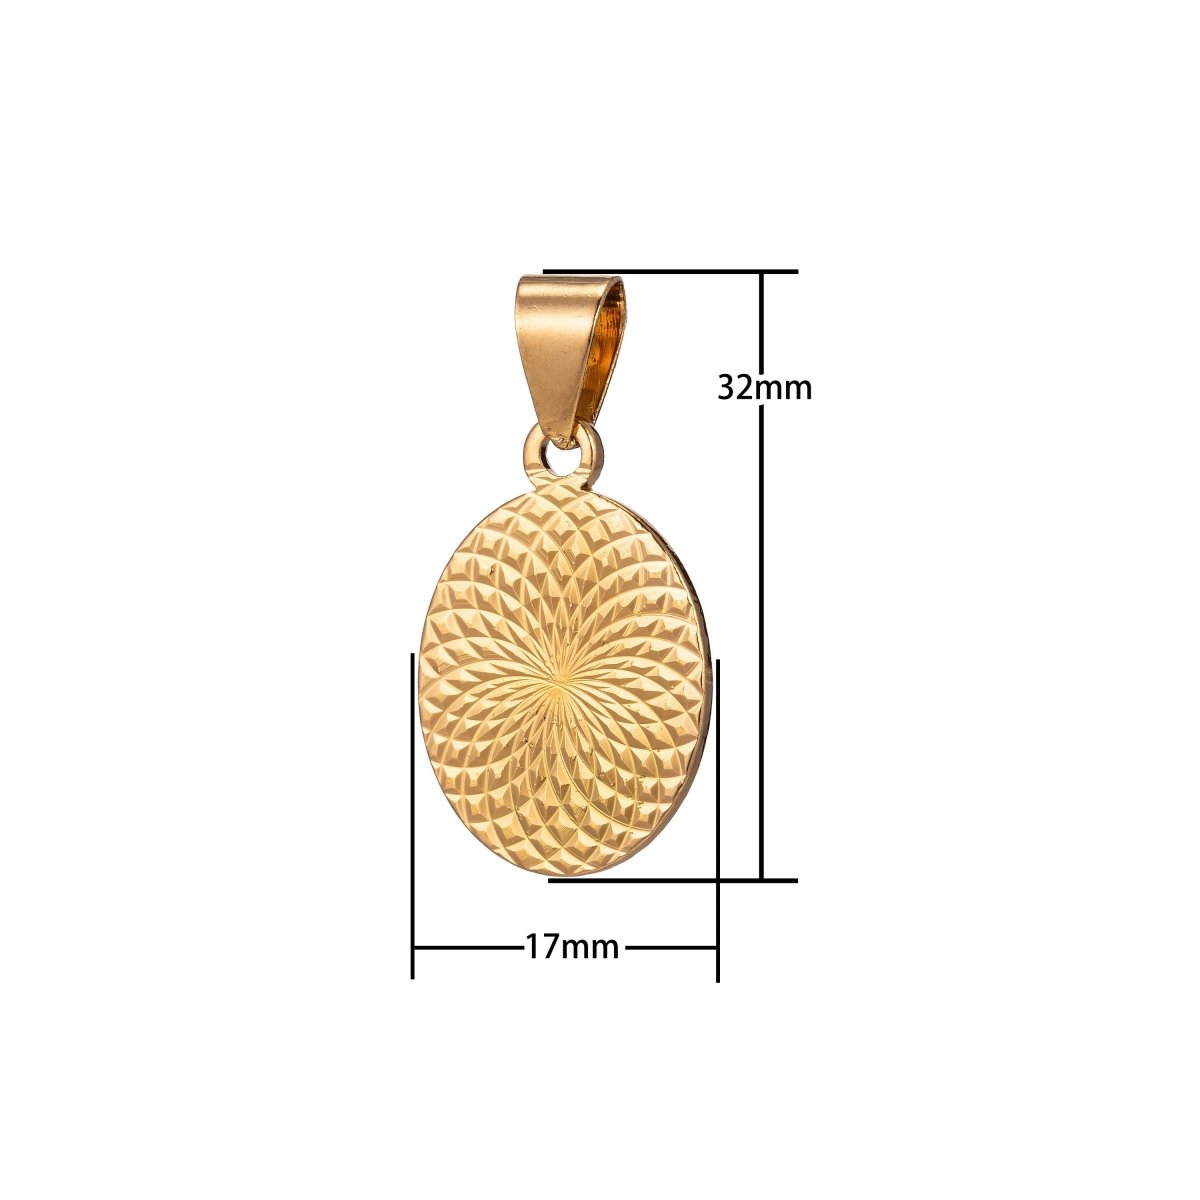 Geometric Jewelry Findings Oval Pendant - Gold Filled Oval Pendant - Necklace Findings - Jewelry Supplies H-901 - DLUXCA